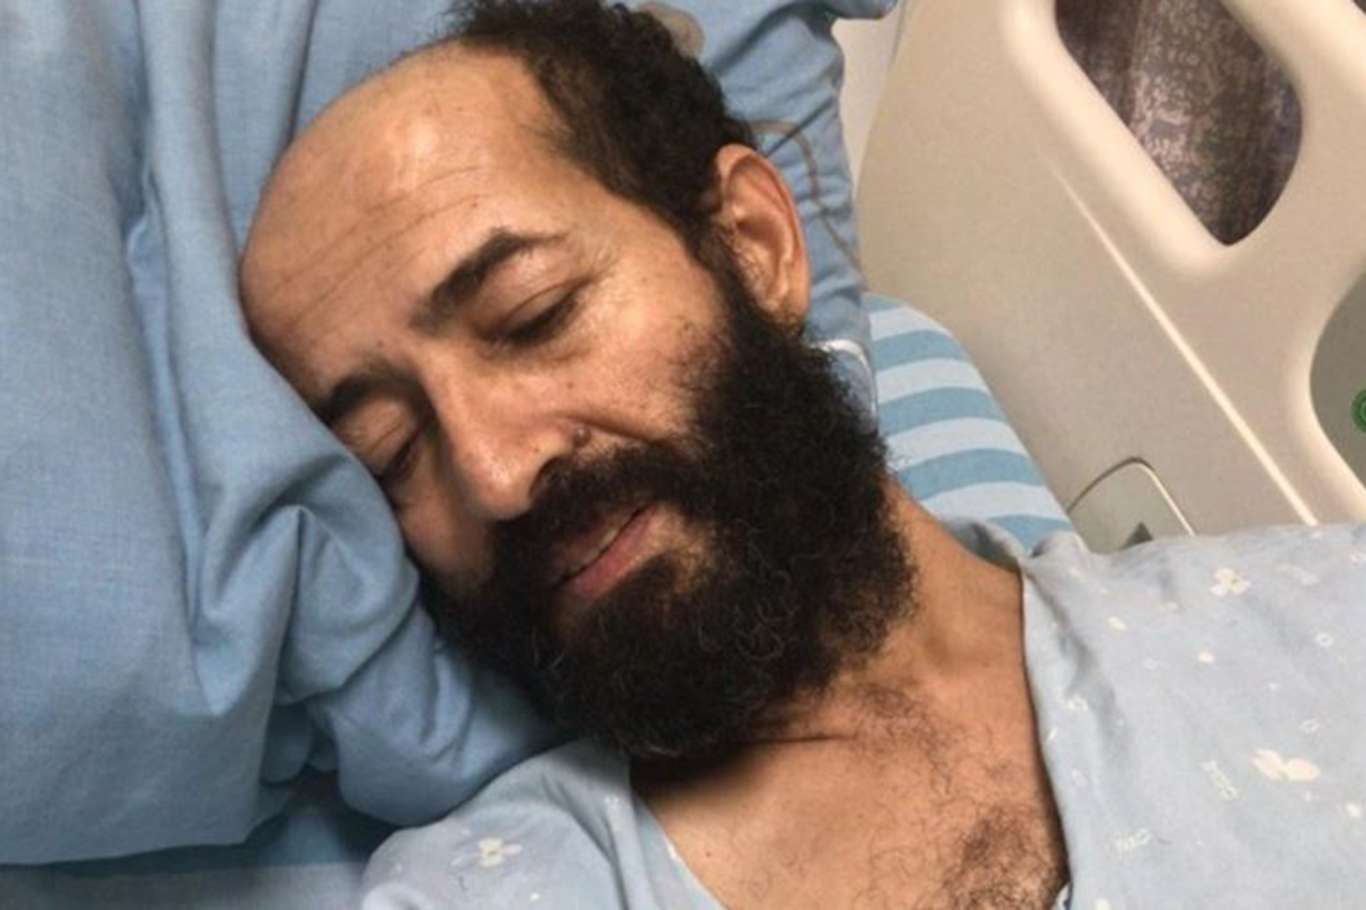 Palestinian prisoner Akhras enters days 88 of his hunger strike